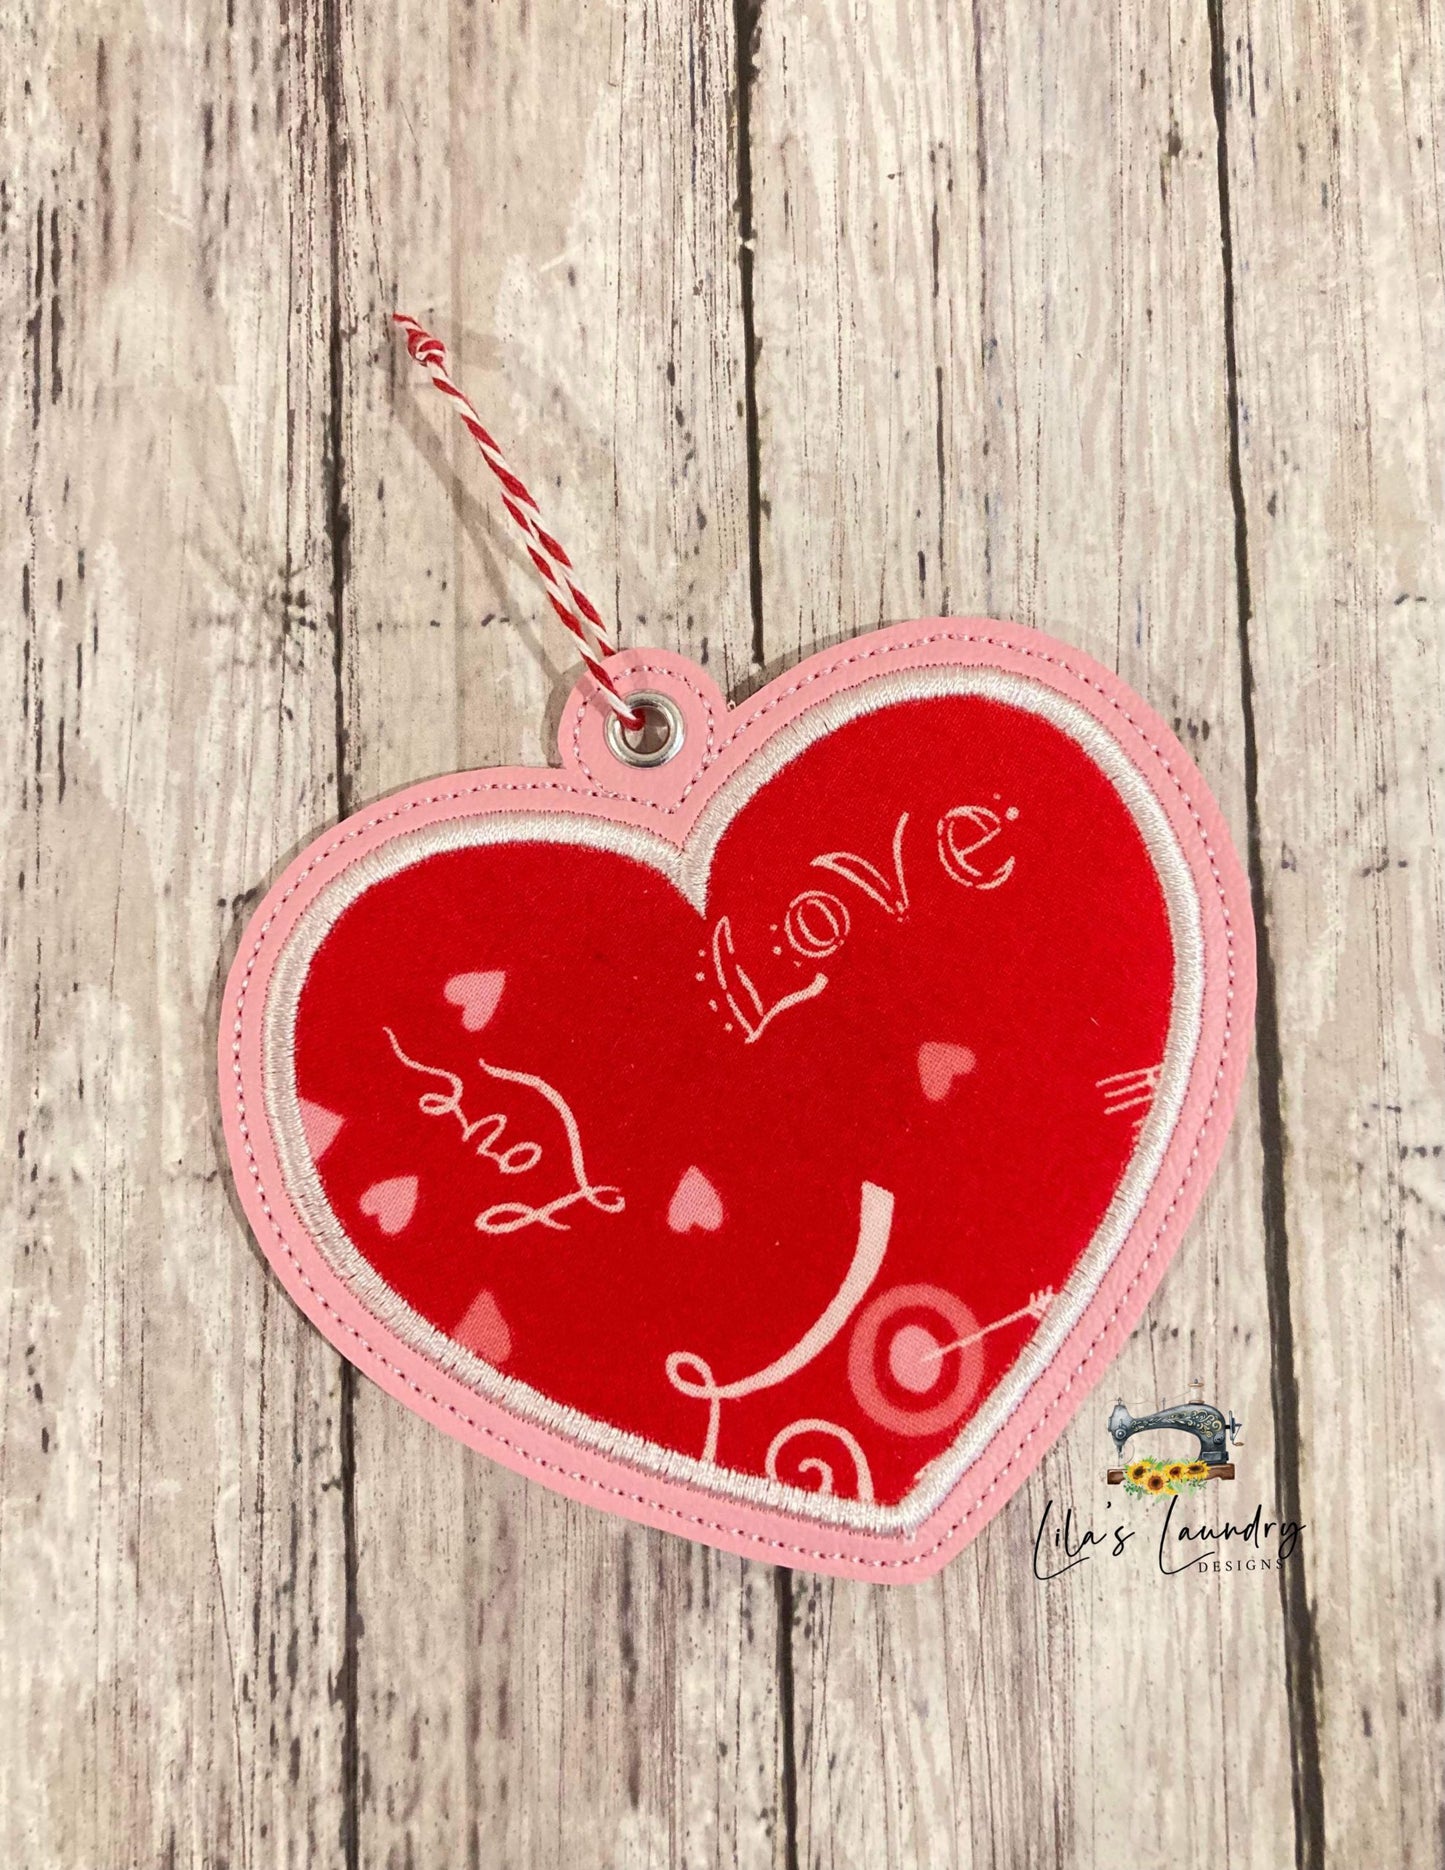 Applique Heart Ornament - Digital Embroidery Design